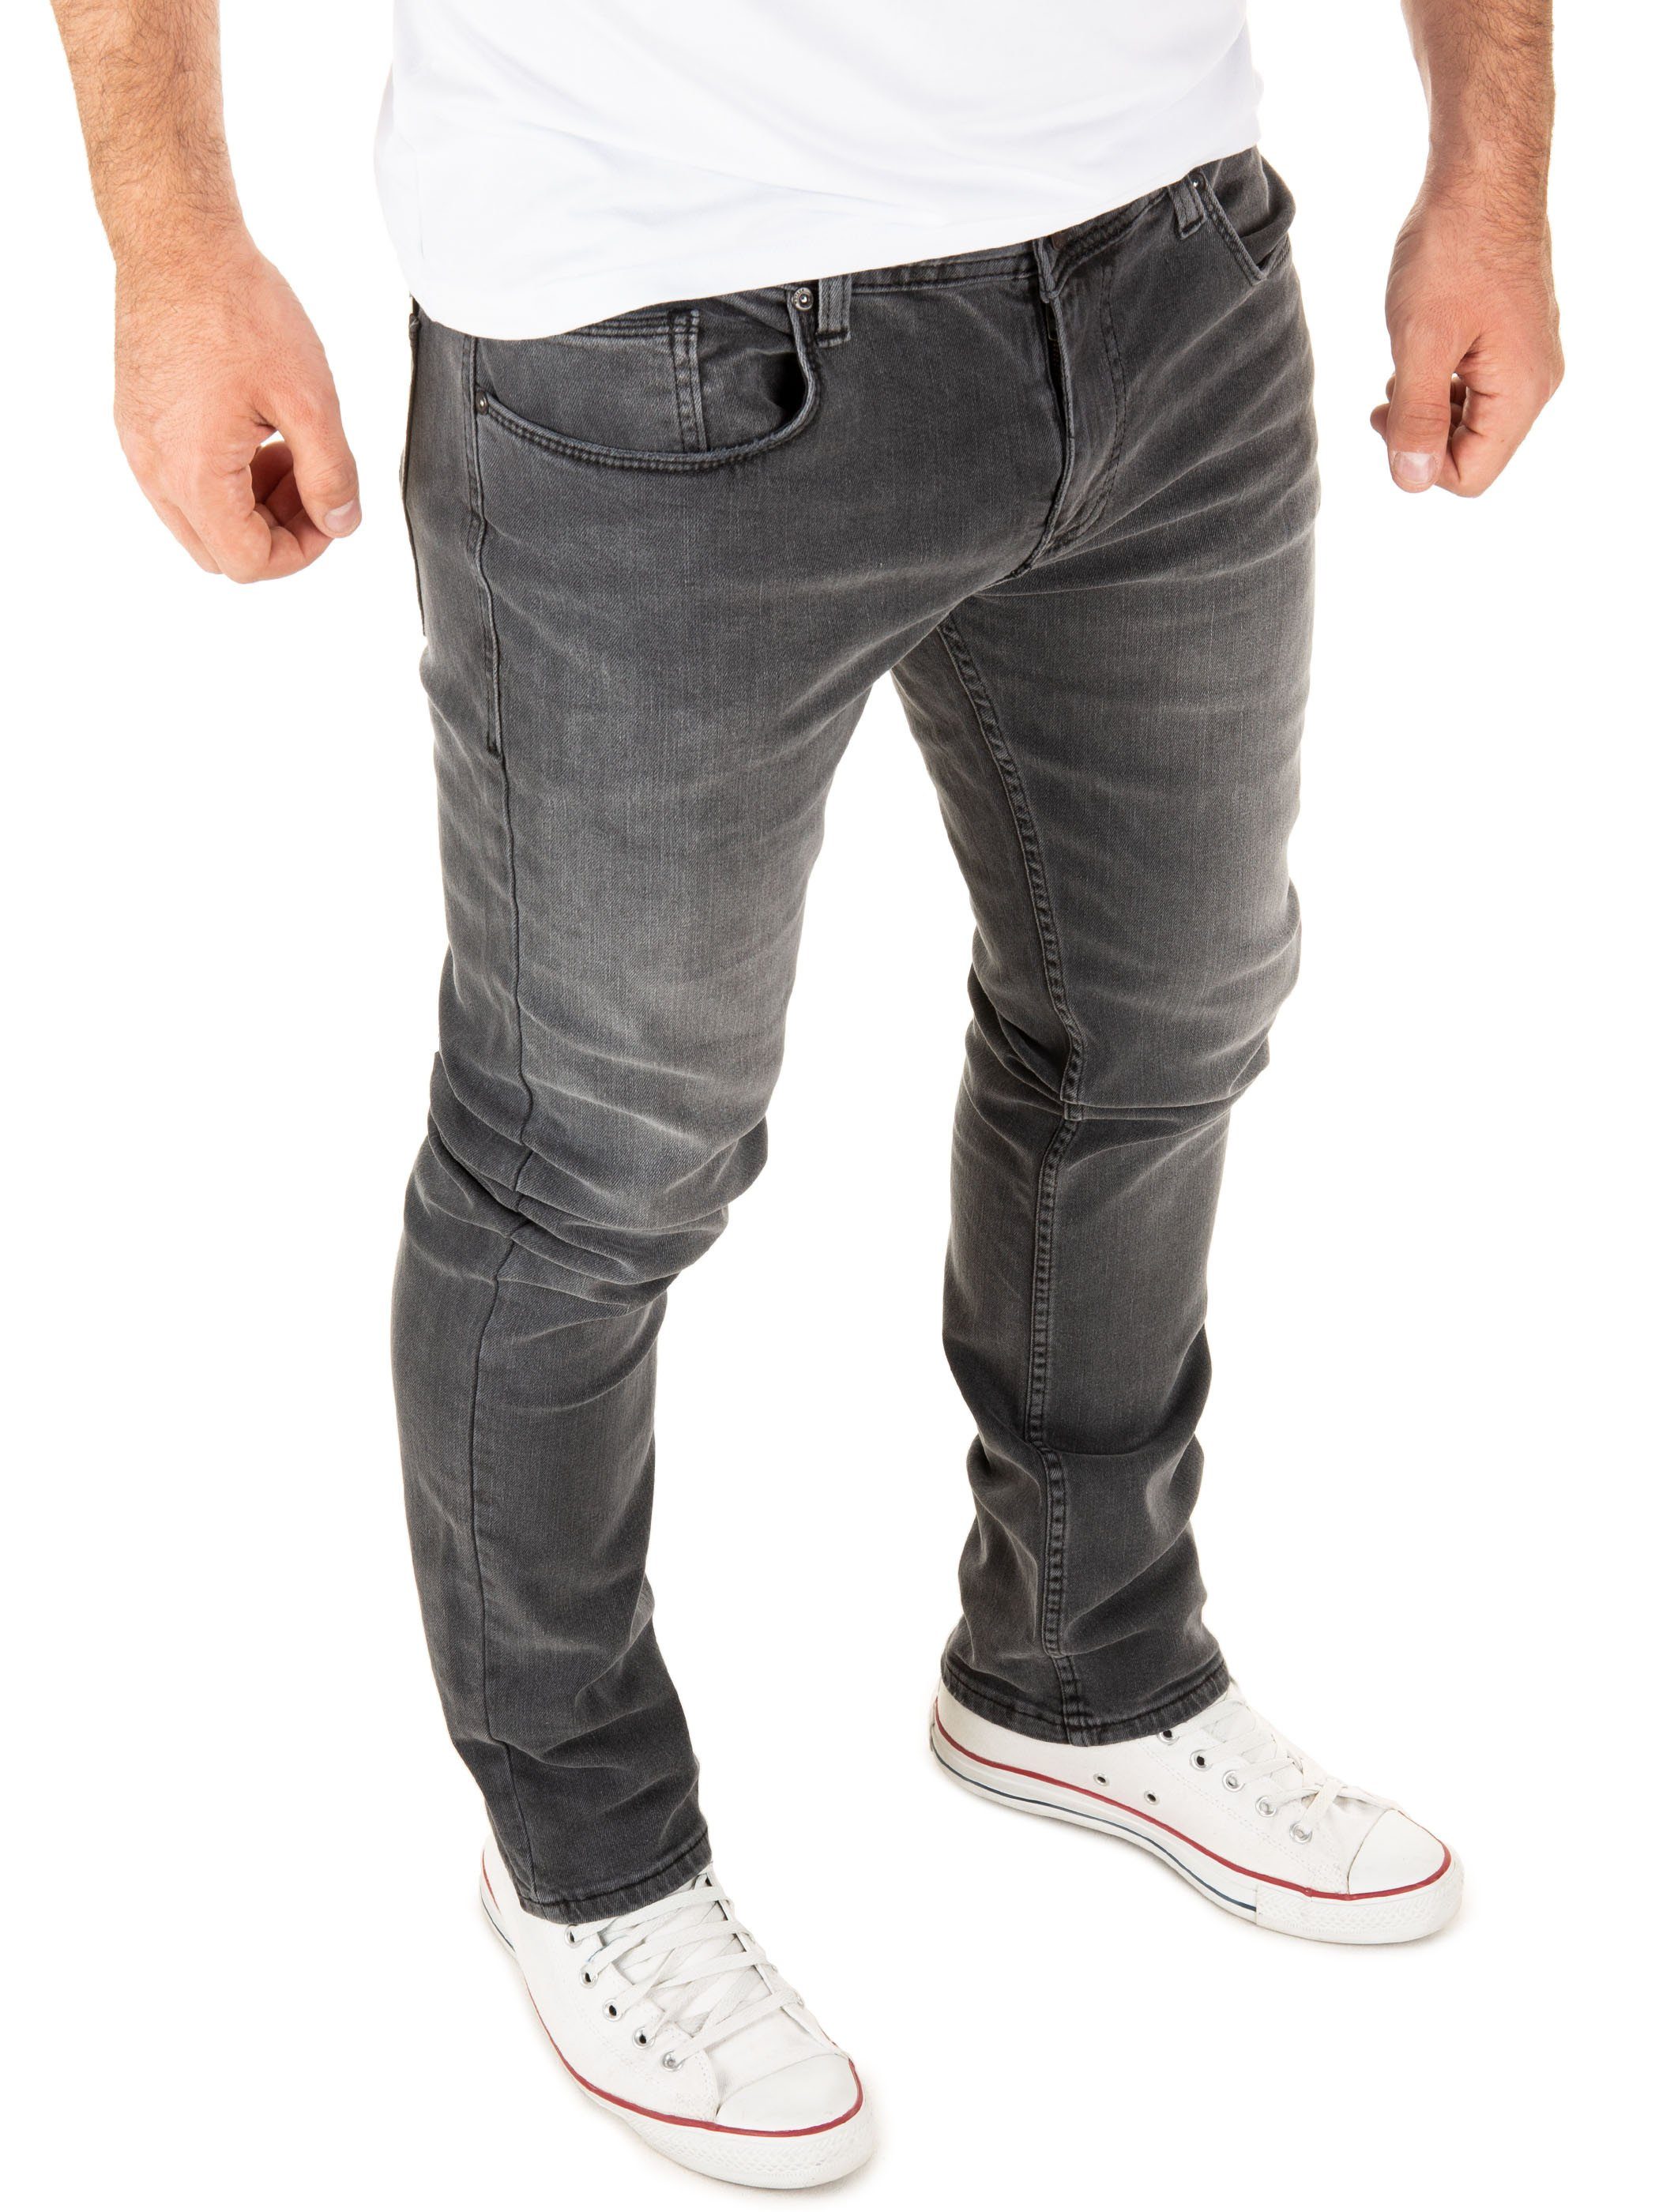 Grau 193901) Jeanshose Stretch mit Stretchanteil WOTEGA Slim-fit-Jeans (Magnet Herren Jeans Justin